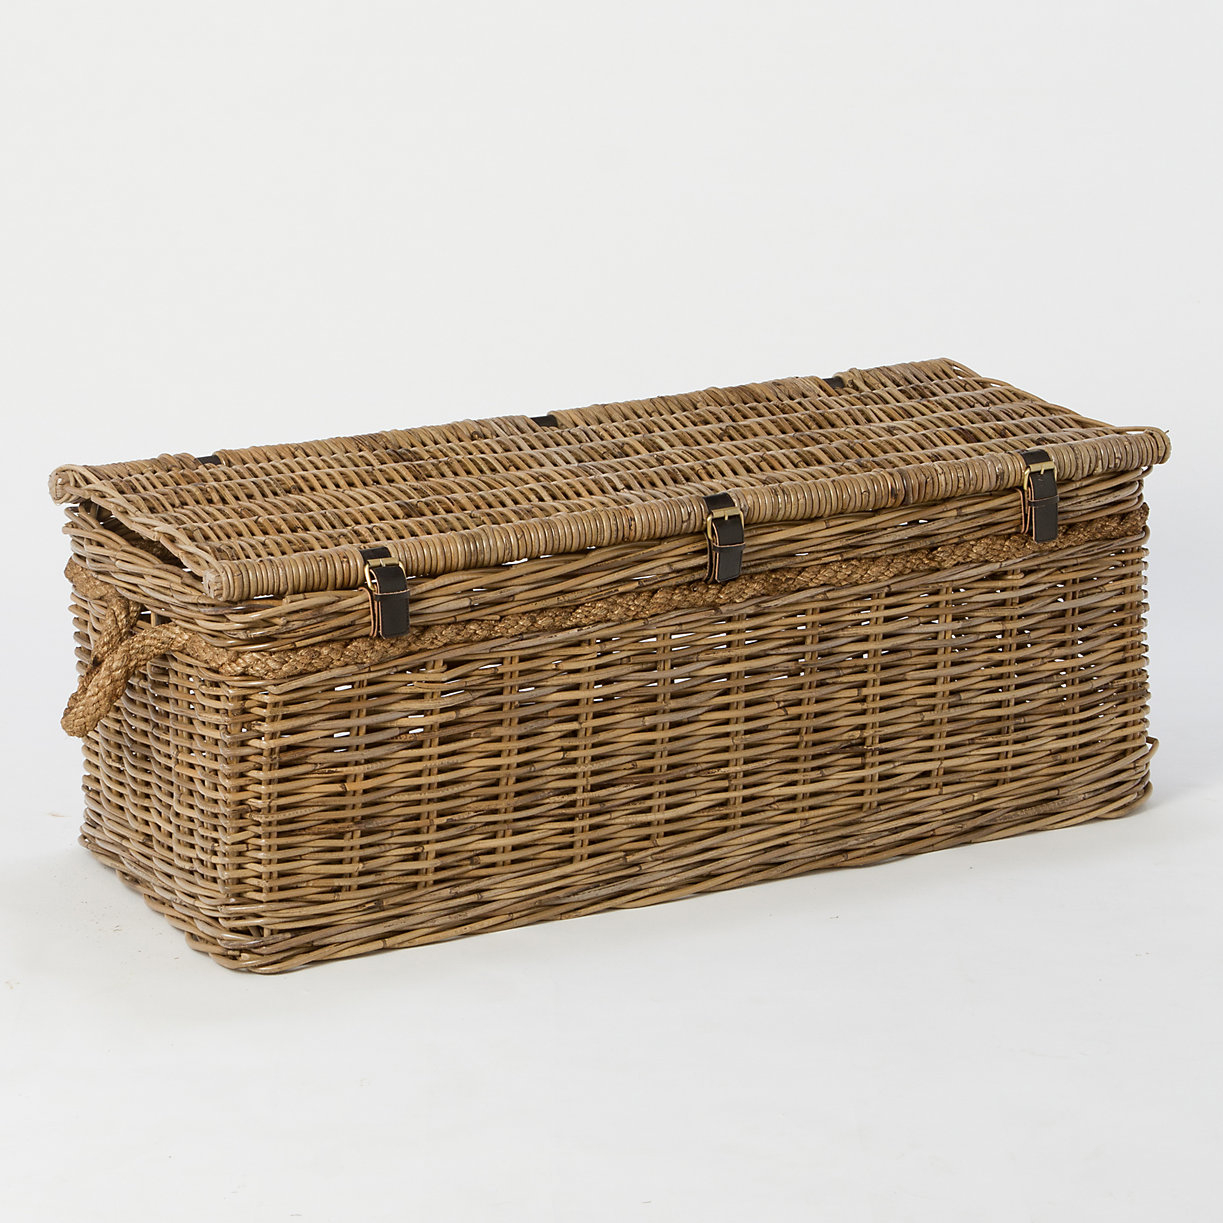 Colton 4-Basket Storage Cabinet